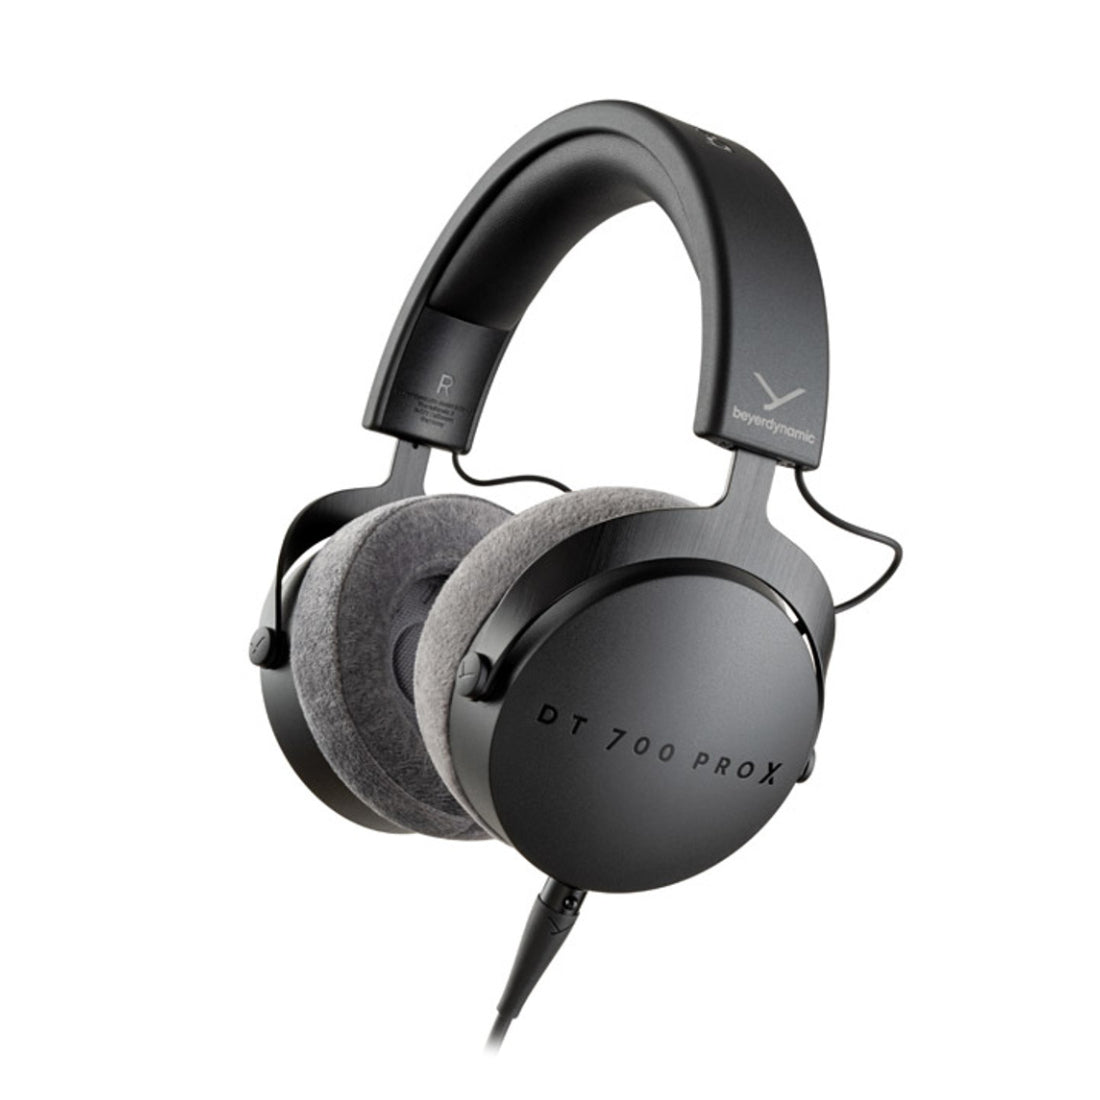 Beyerdynamic DT 700 Pro X Closed Back Premium Studio Headphones - سماعة - Store 974 | ستور ٩٧٤